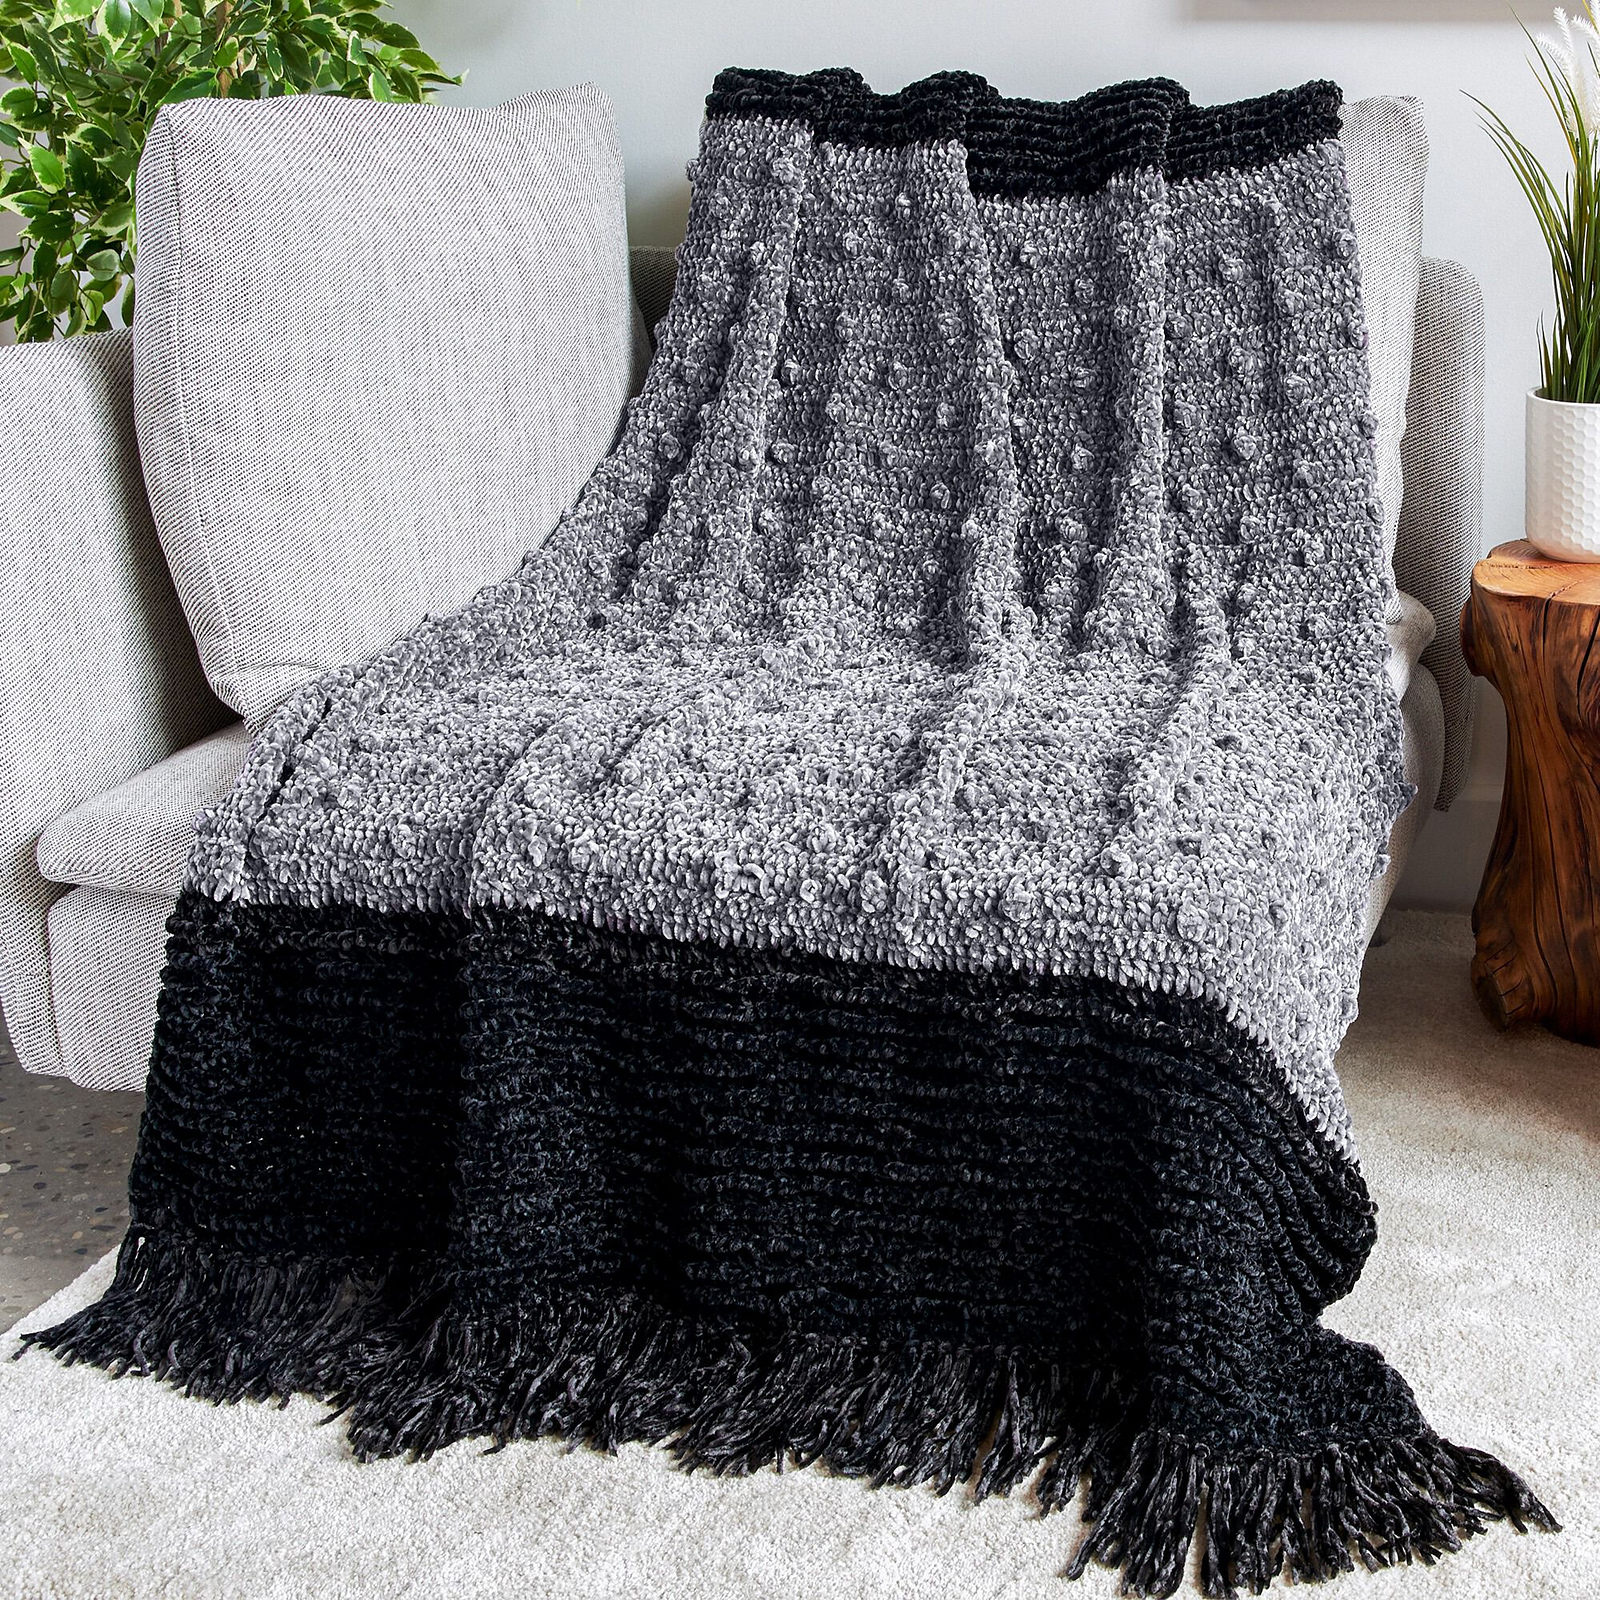 Crochet Baby Blanket Patterns Ideas - Evelyn's World! My Dreams, My ...